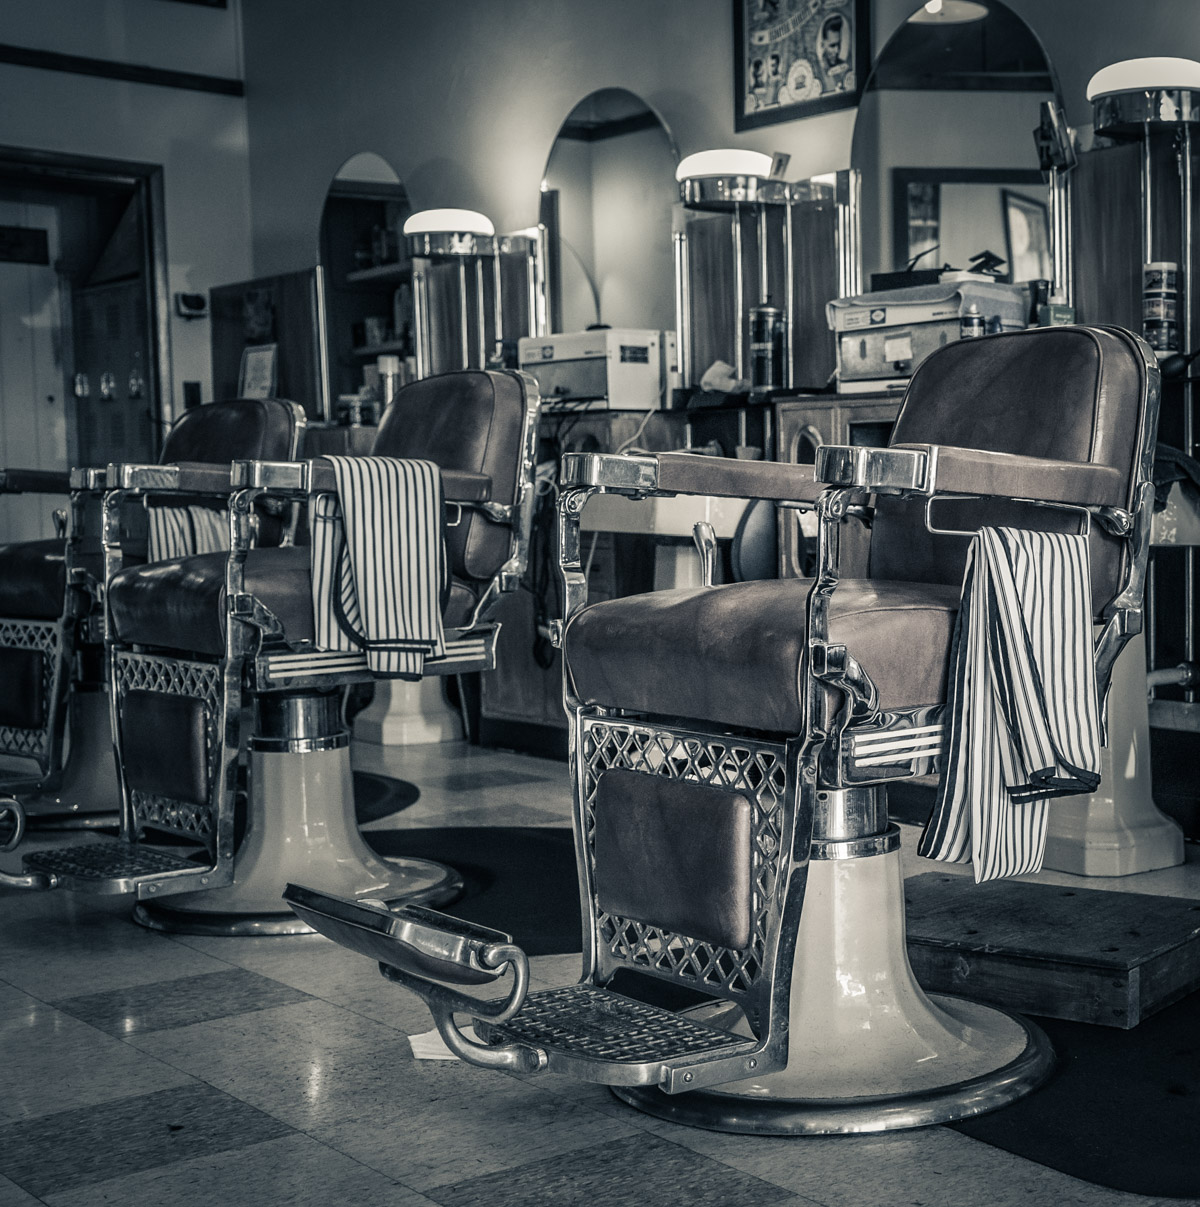 Chops Barbershop and Vintage Clothing 💈 Arts District Las Vegas 